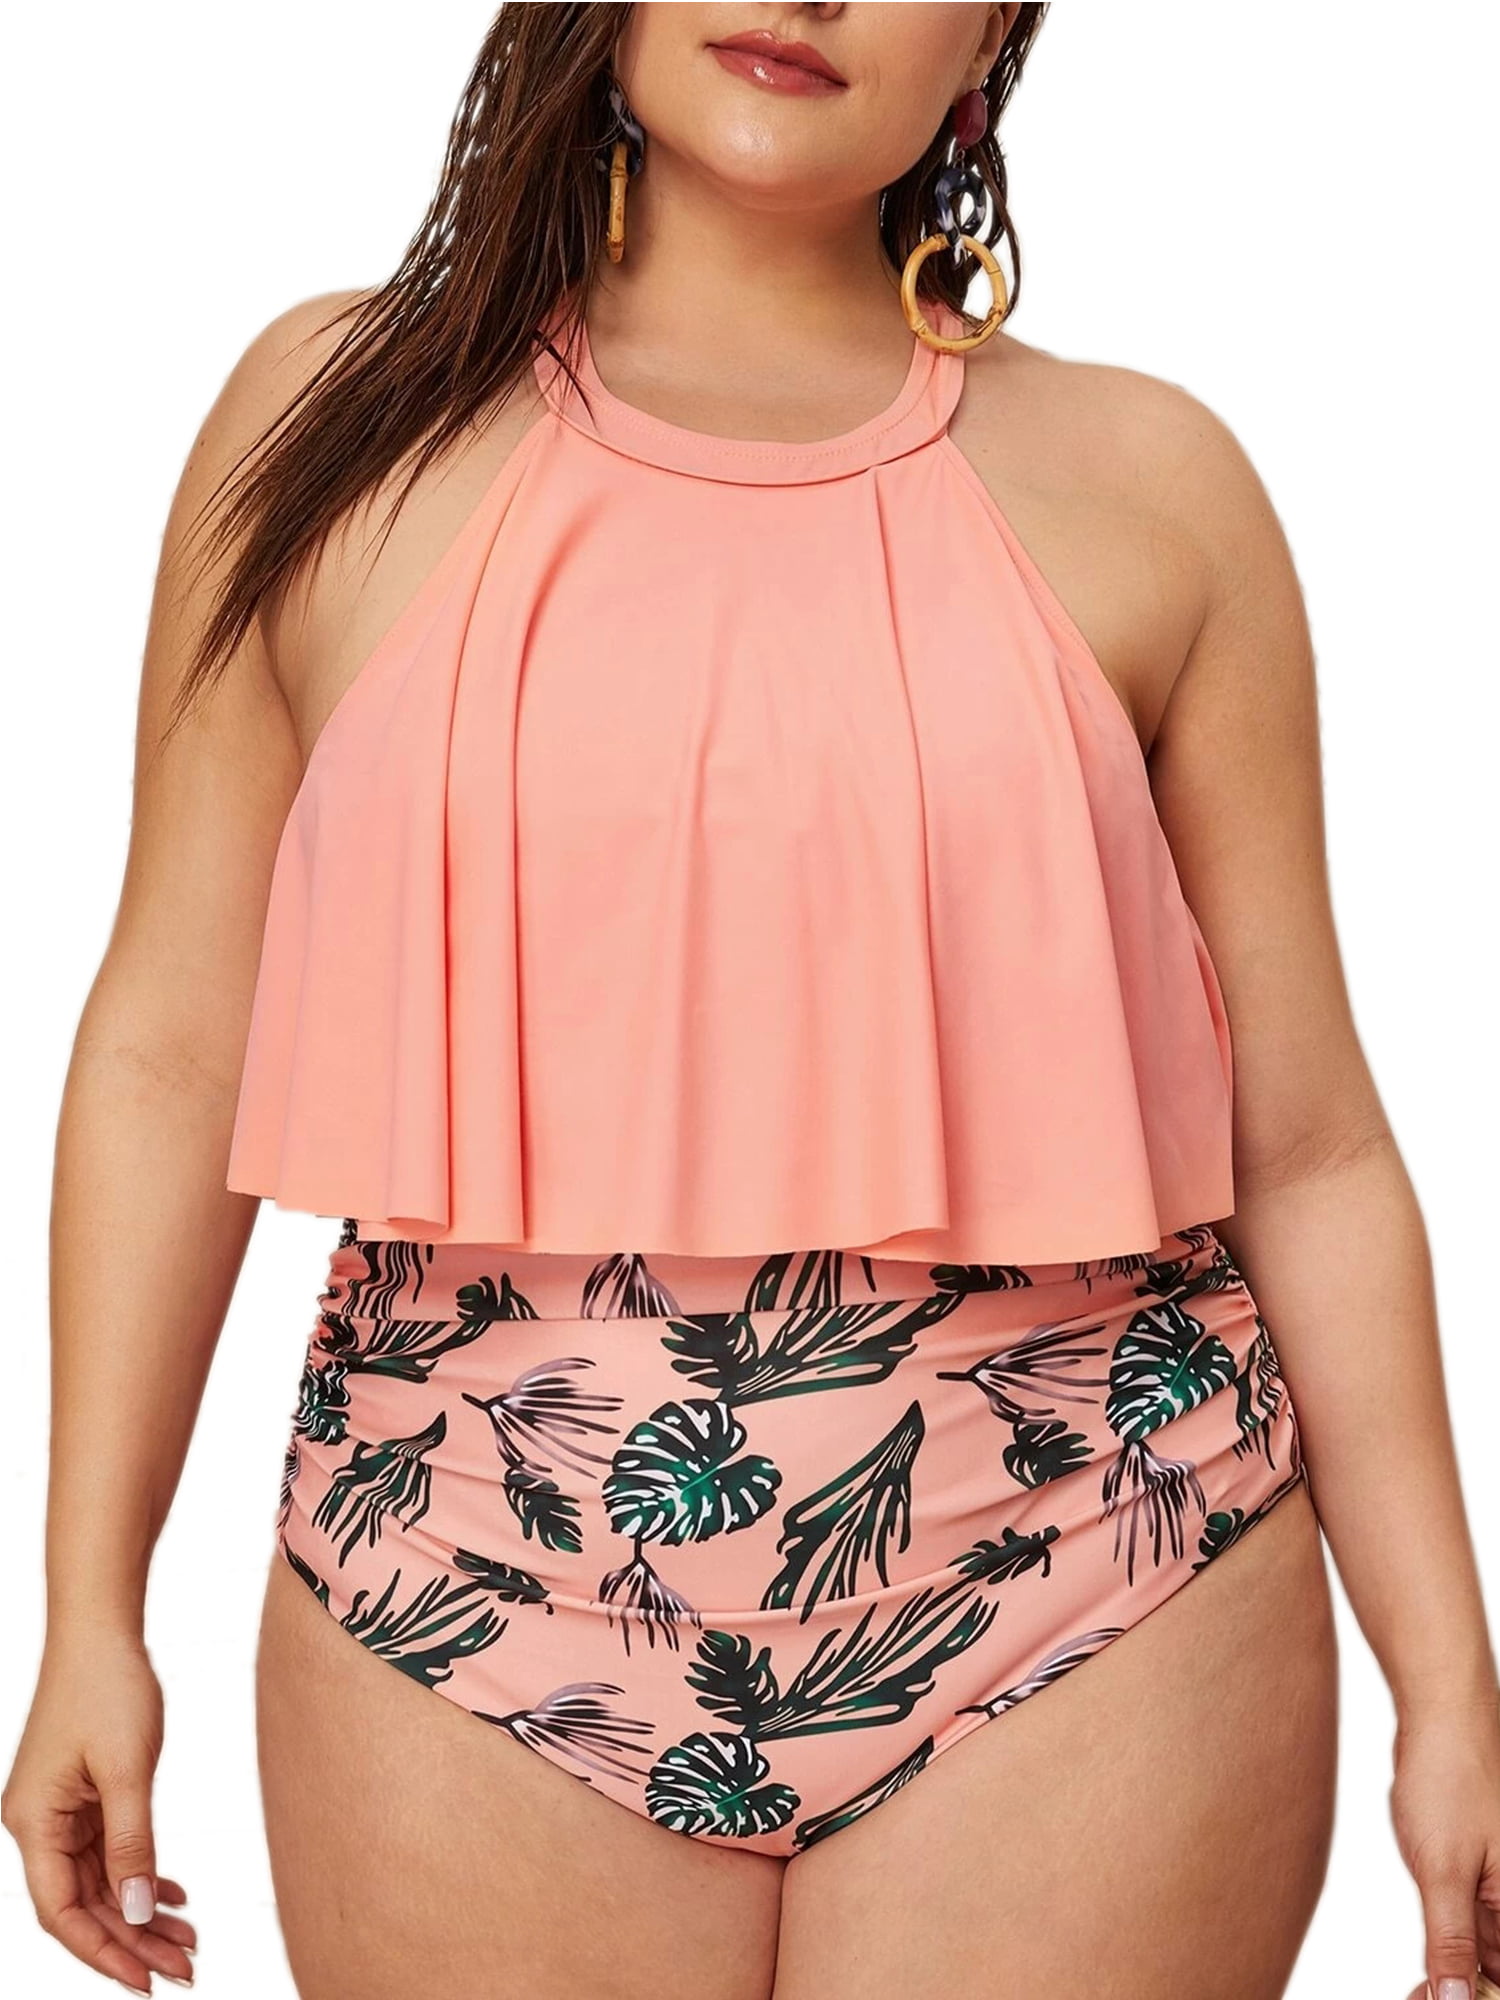 Plus Size Women High Waist Print Bikini Set Swimwear Beach Swimsuit Bathing Suit